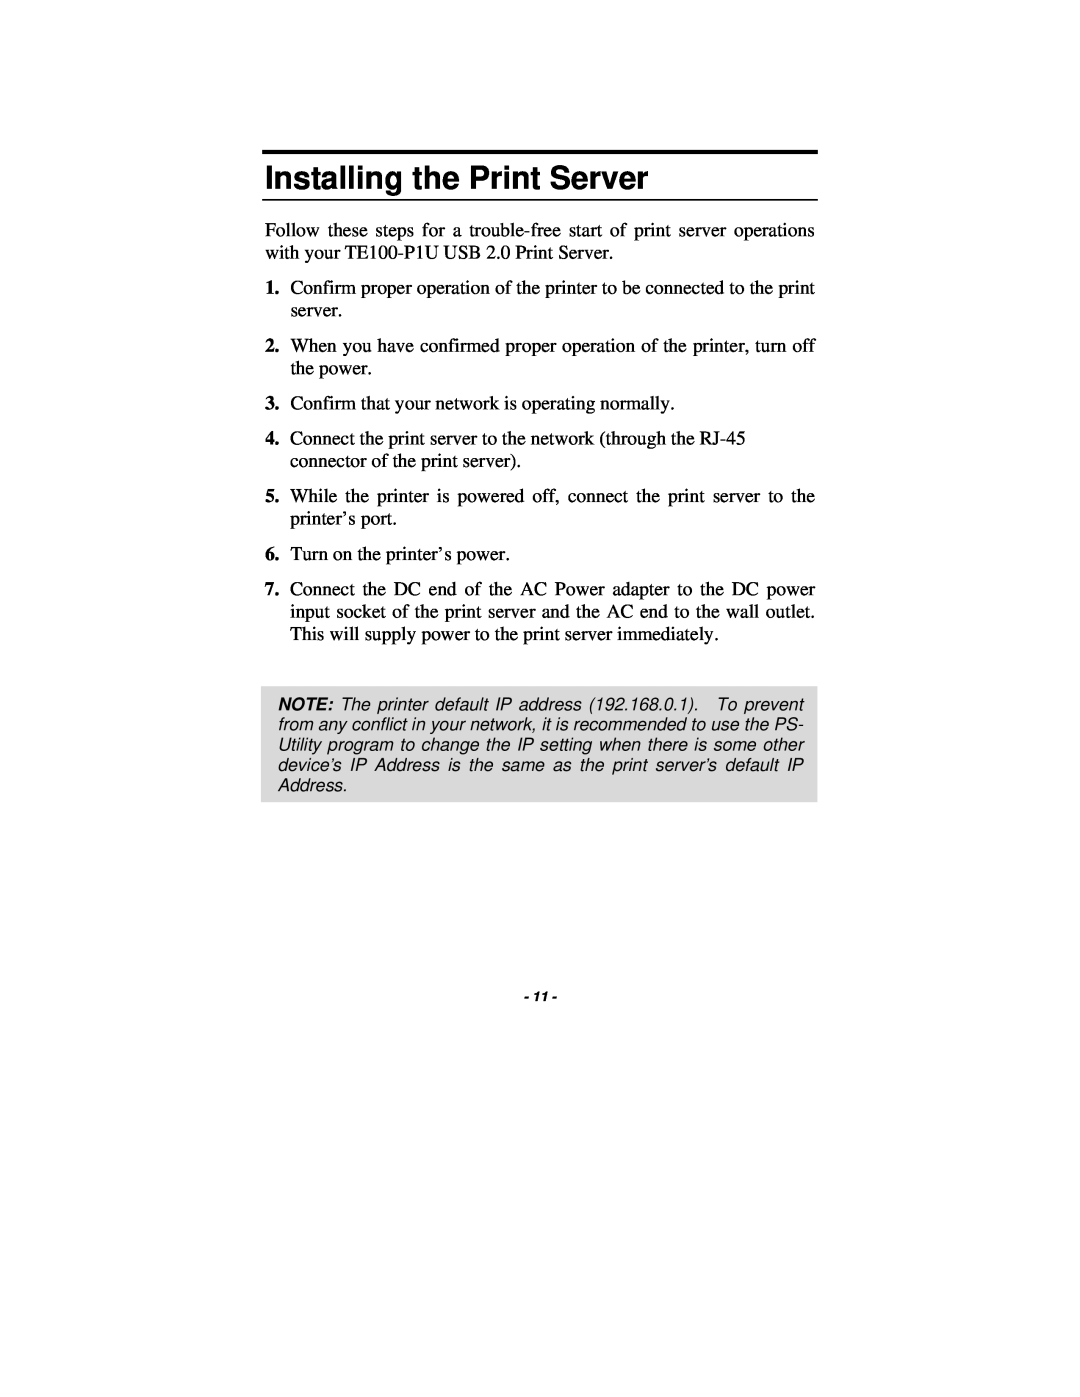 TRENDnet TE100-P1U manual Installing the Print Server 